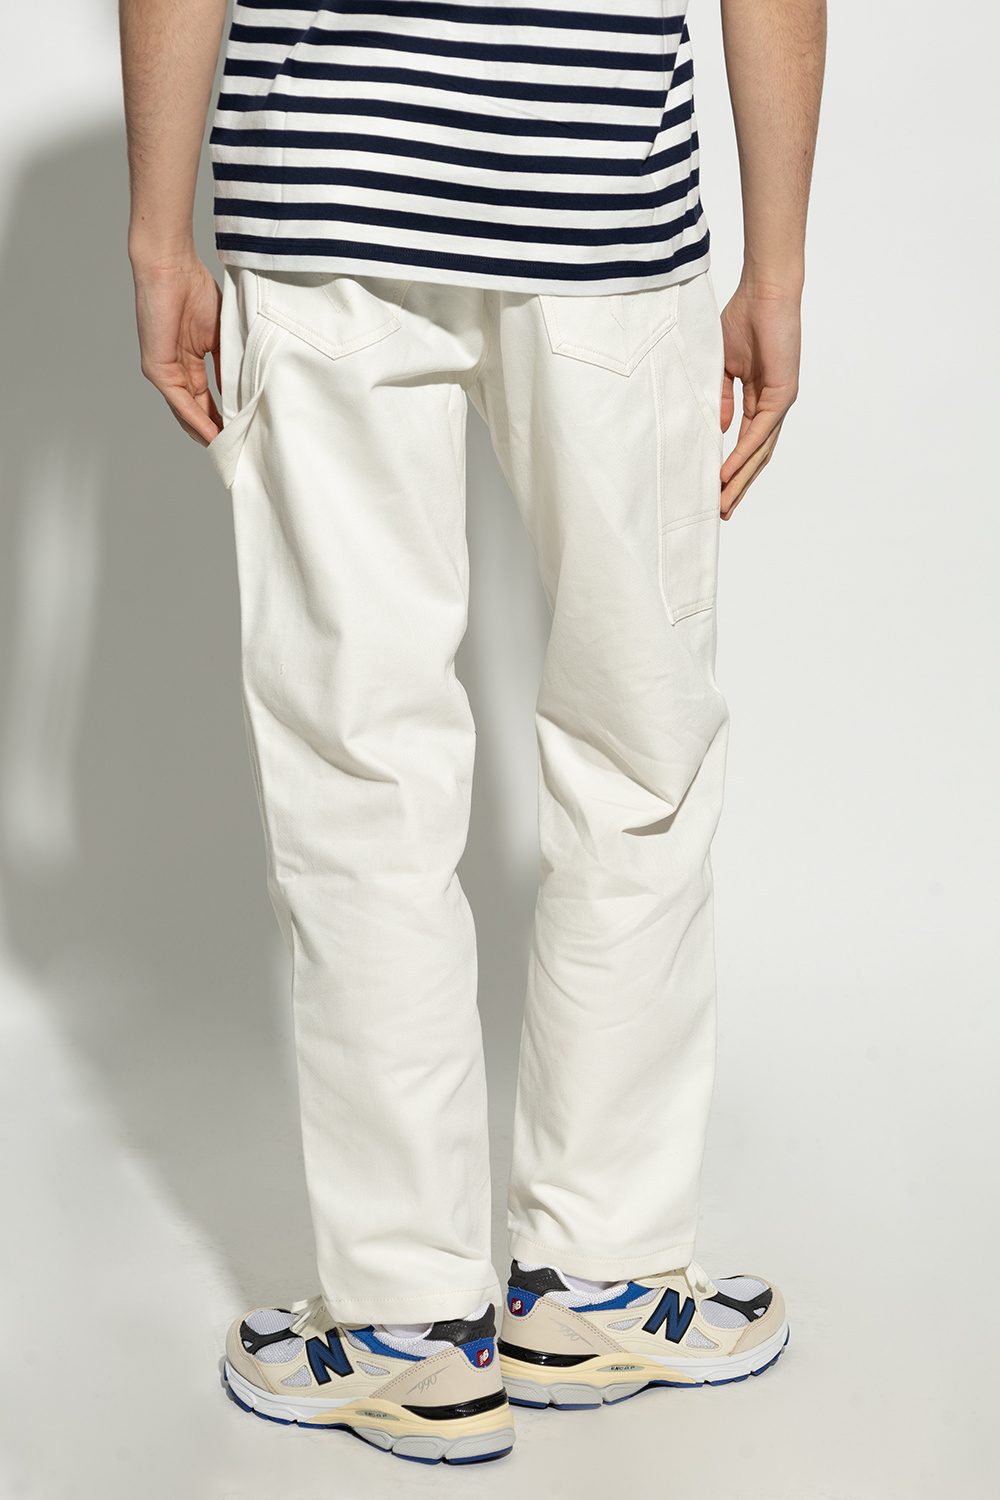 Ami Alexandre Mattiussi Pack Tiger T-Shirt And Legging Set 0mths-2yrs